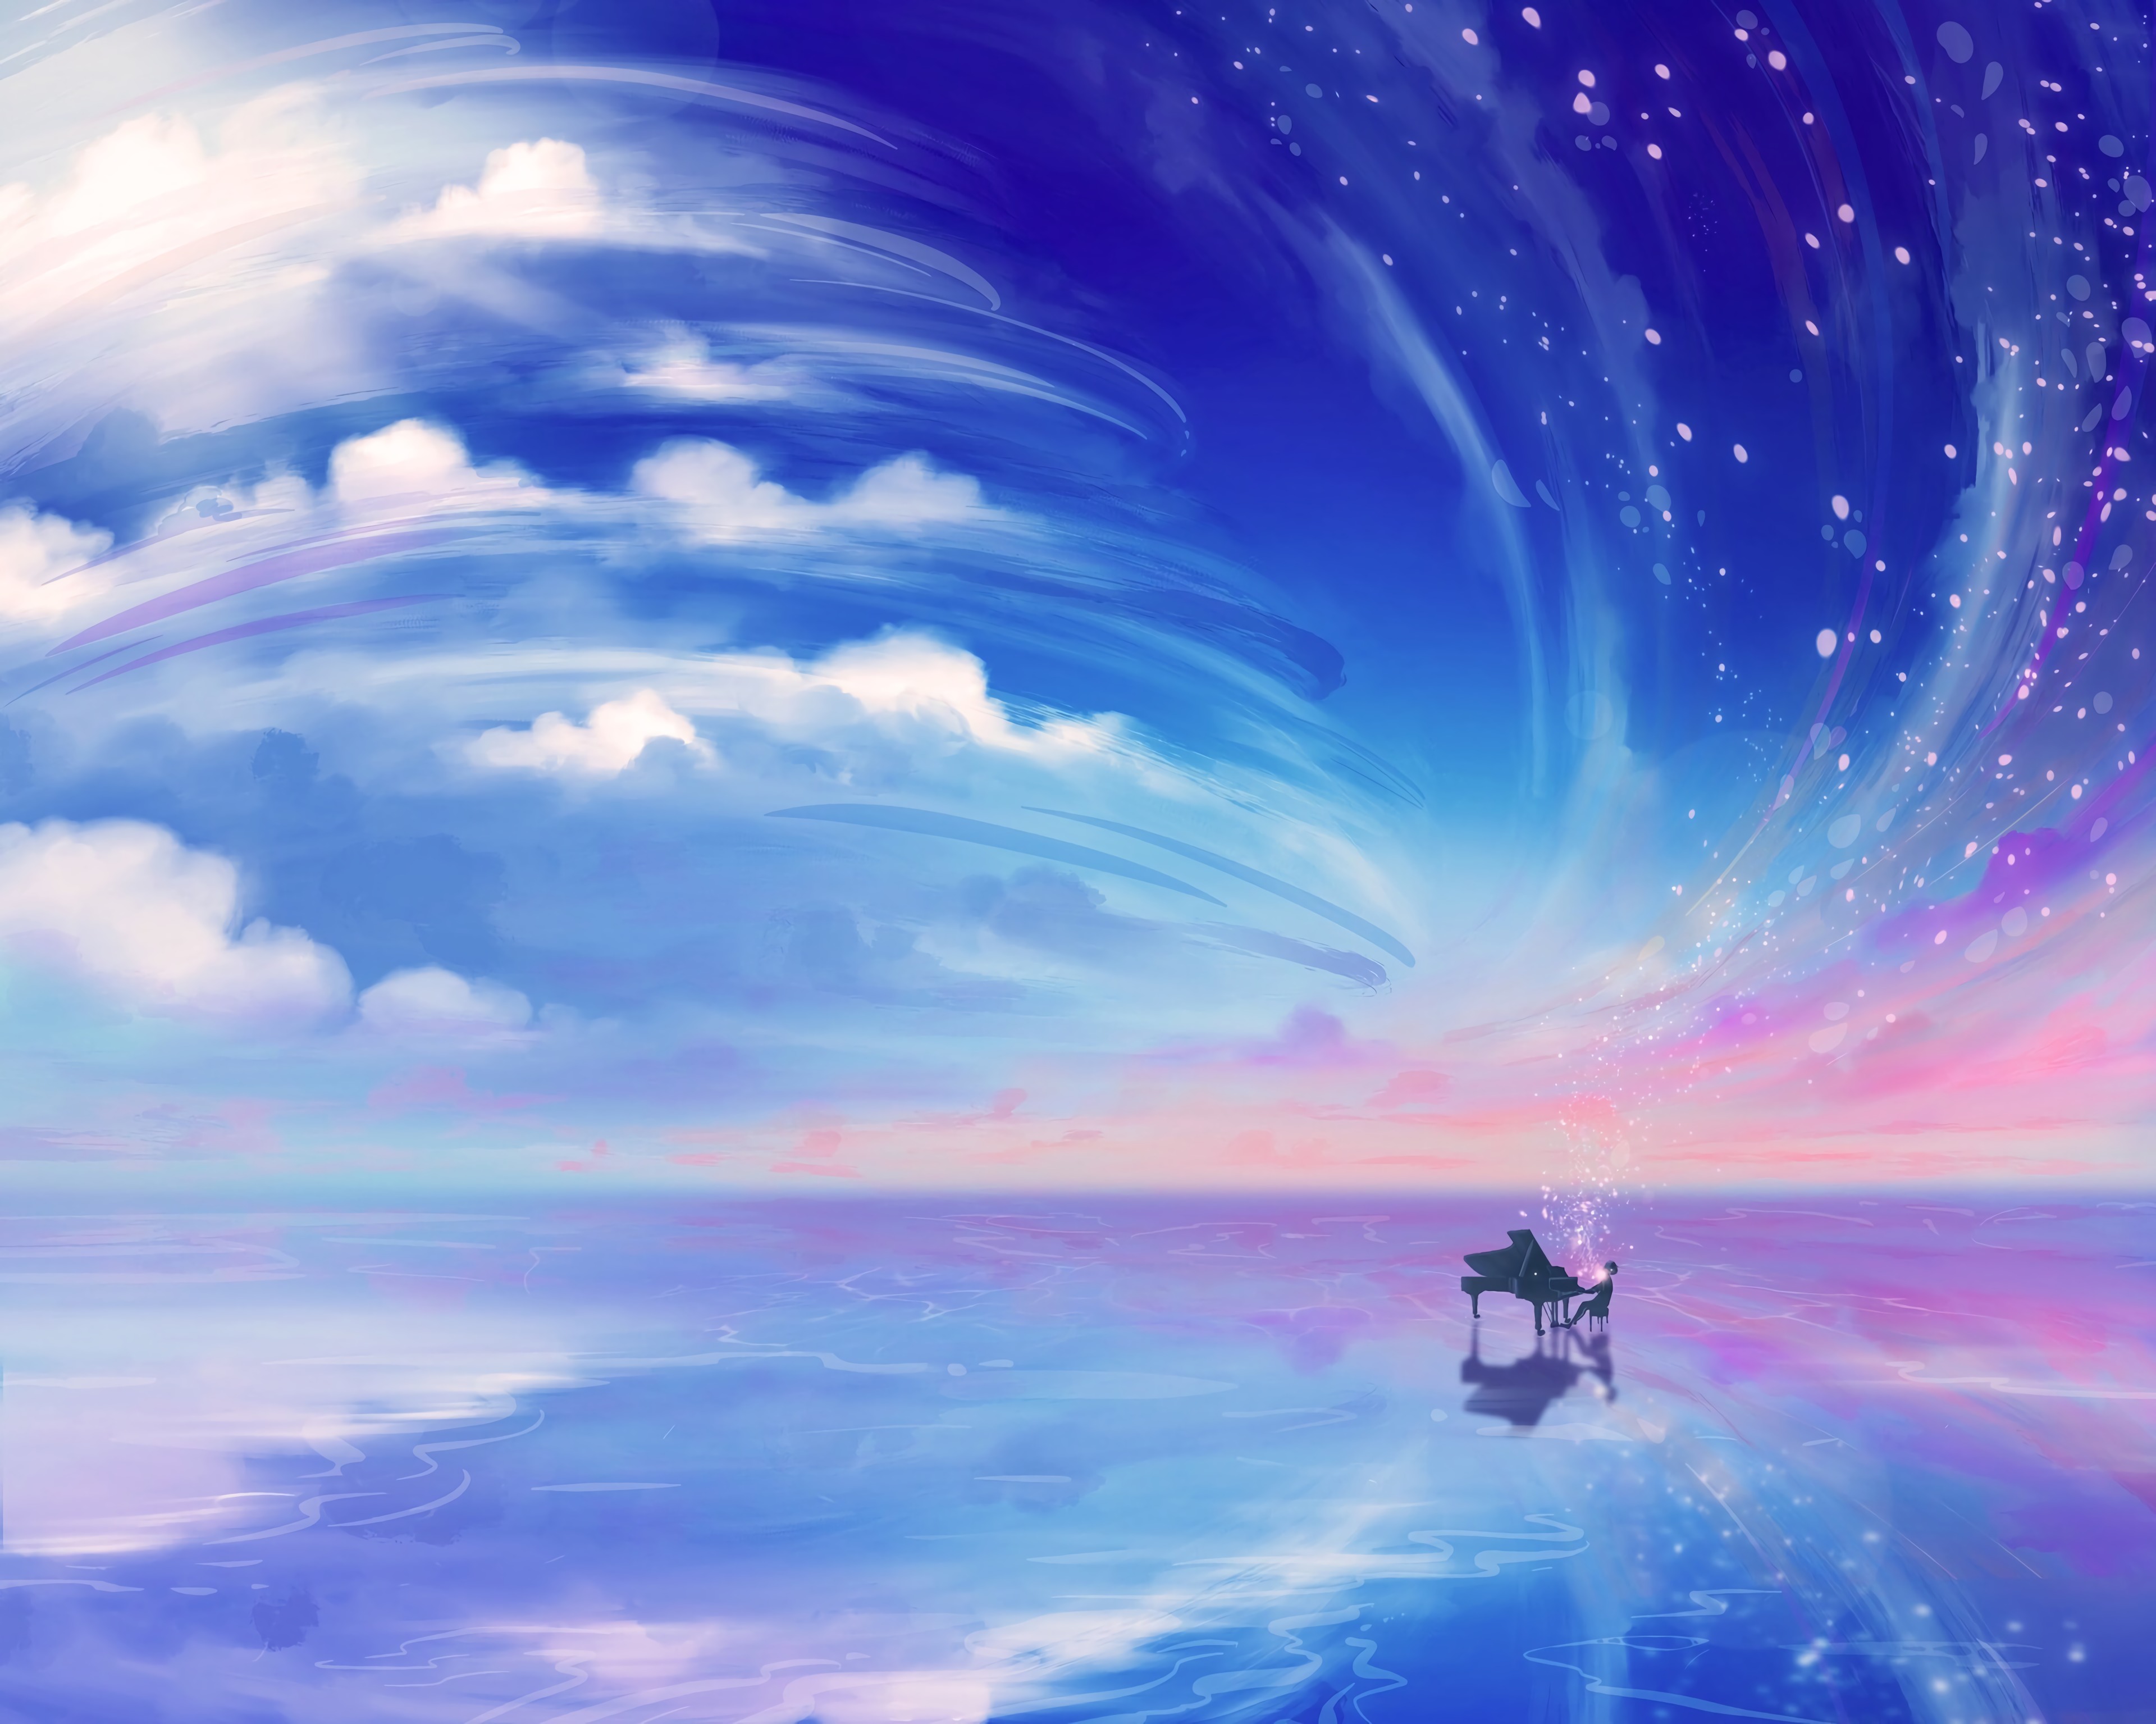 General 3840x3070 anime anime boys Shigatsu wa Kimi no Uso digital art fantasy art photoshopped piano clouds sky